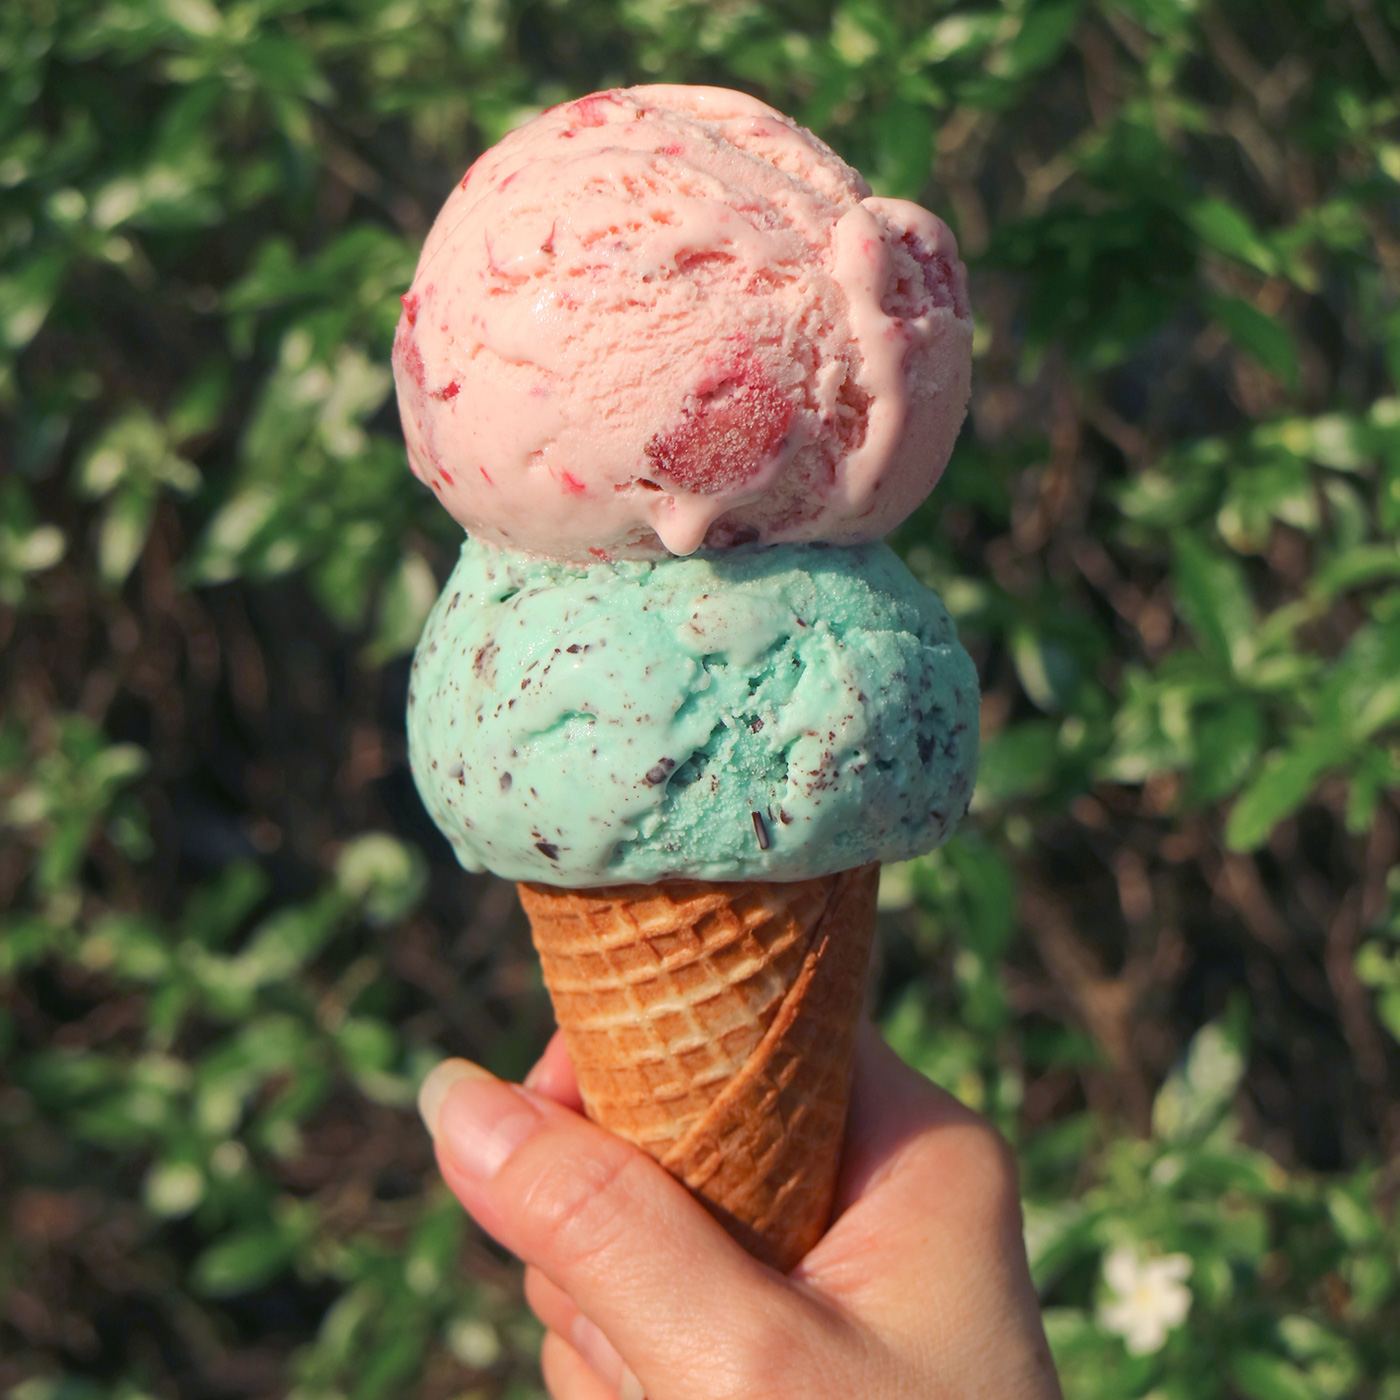 Bristol Farms - BF 101: The Scoop on Ice Cream